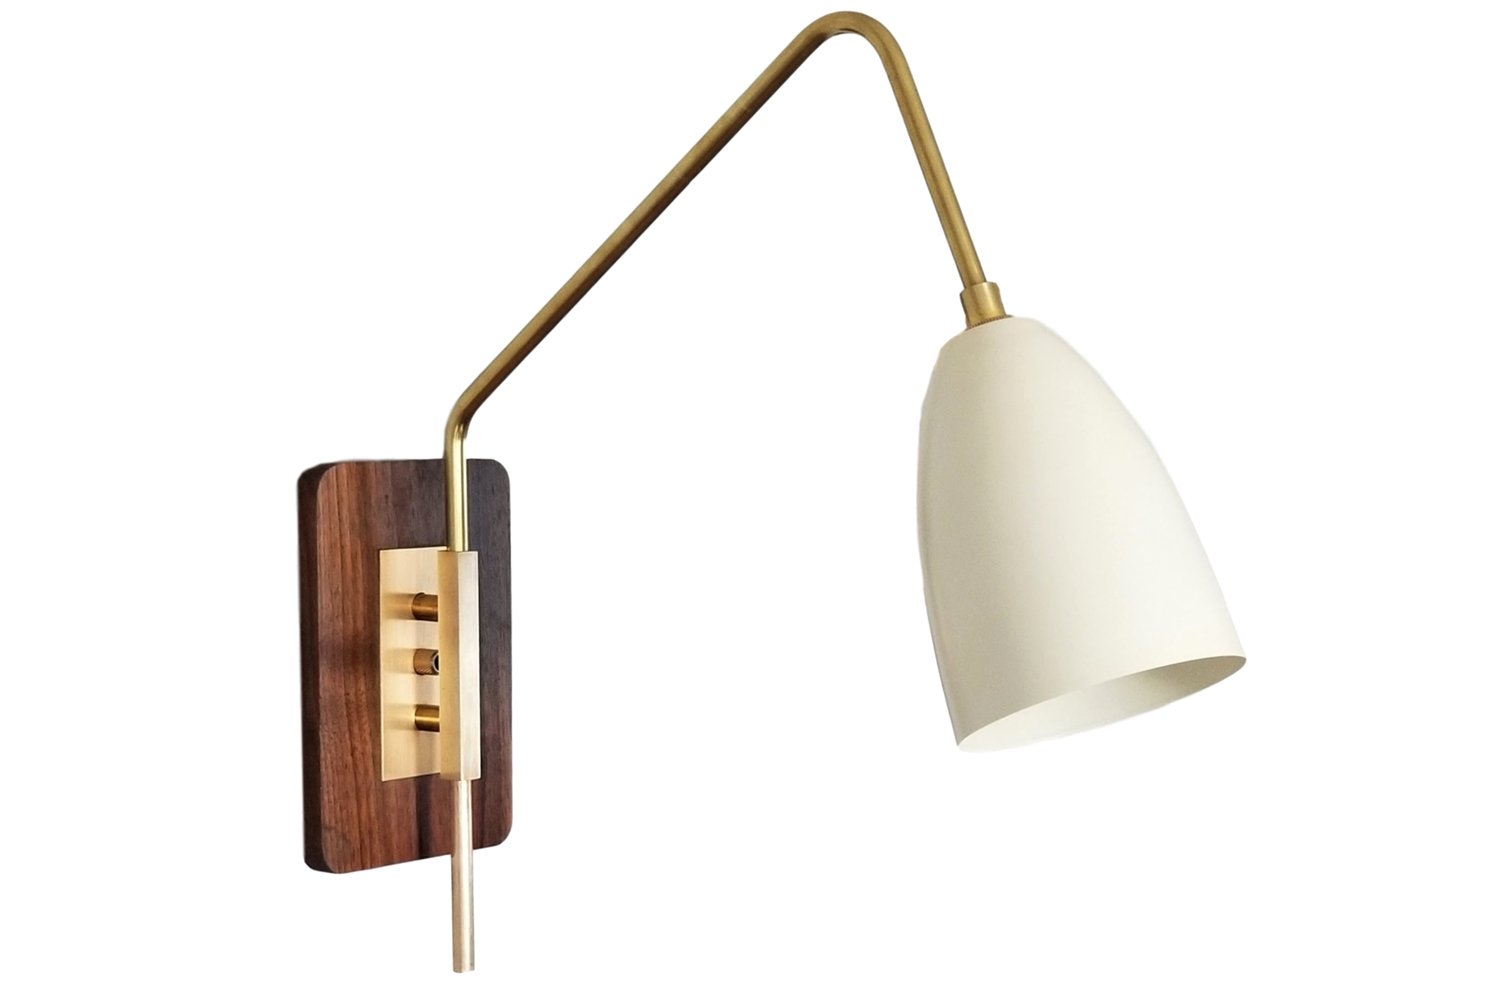 Custom lighting design studio Blueprint Lighting launched the Elska wall mount reading lamp 